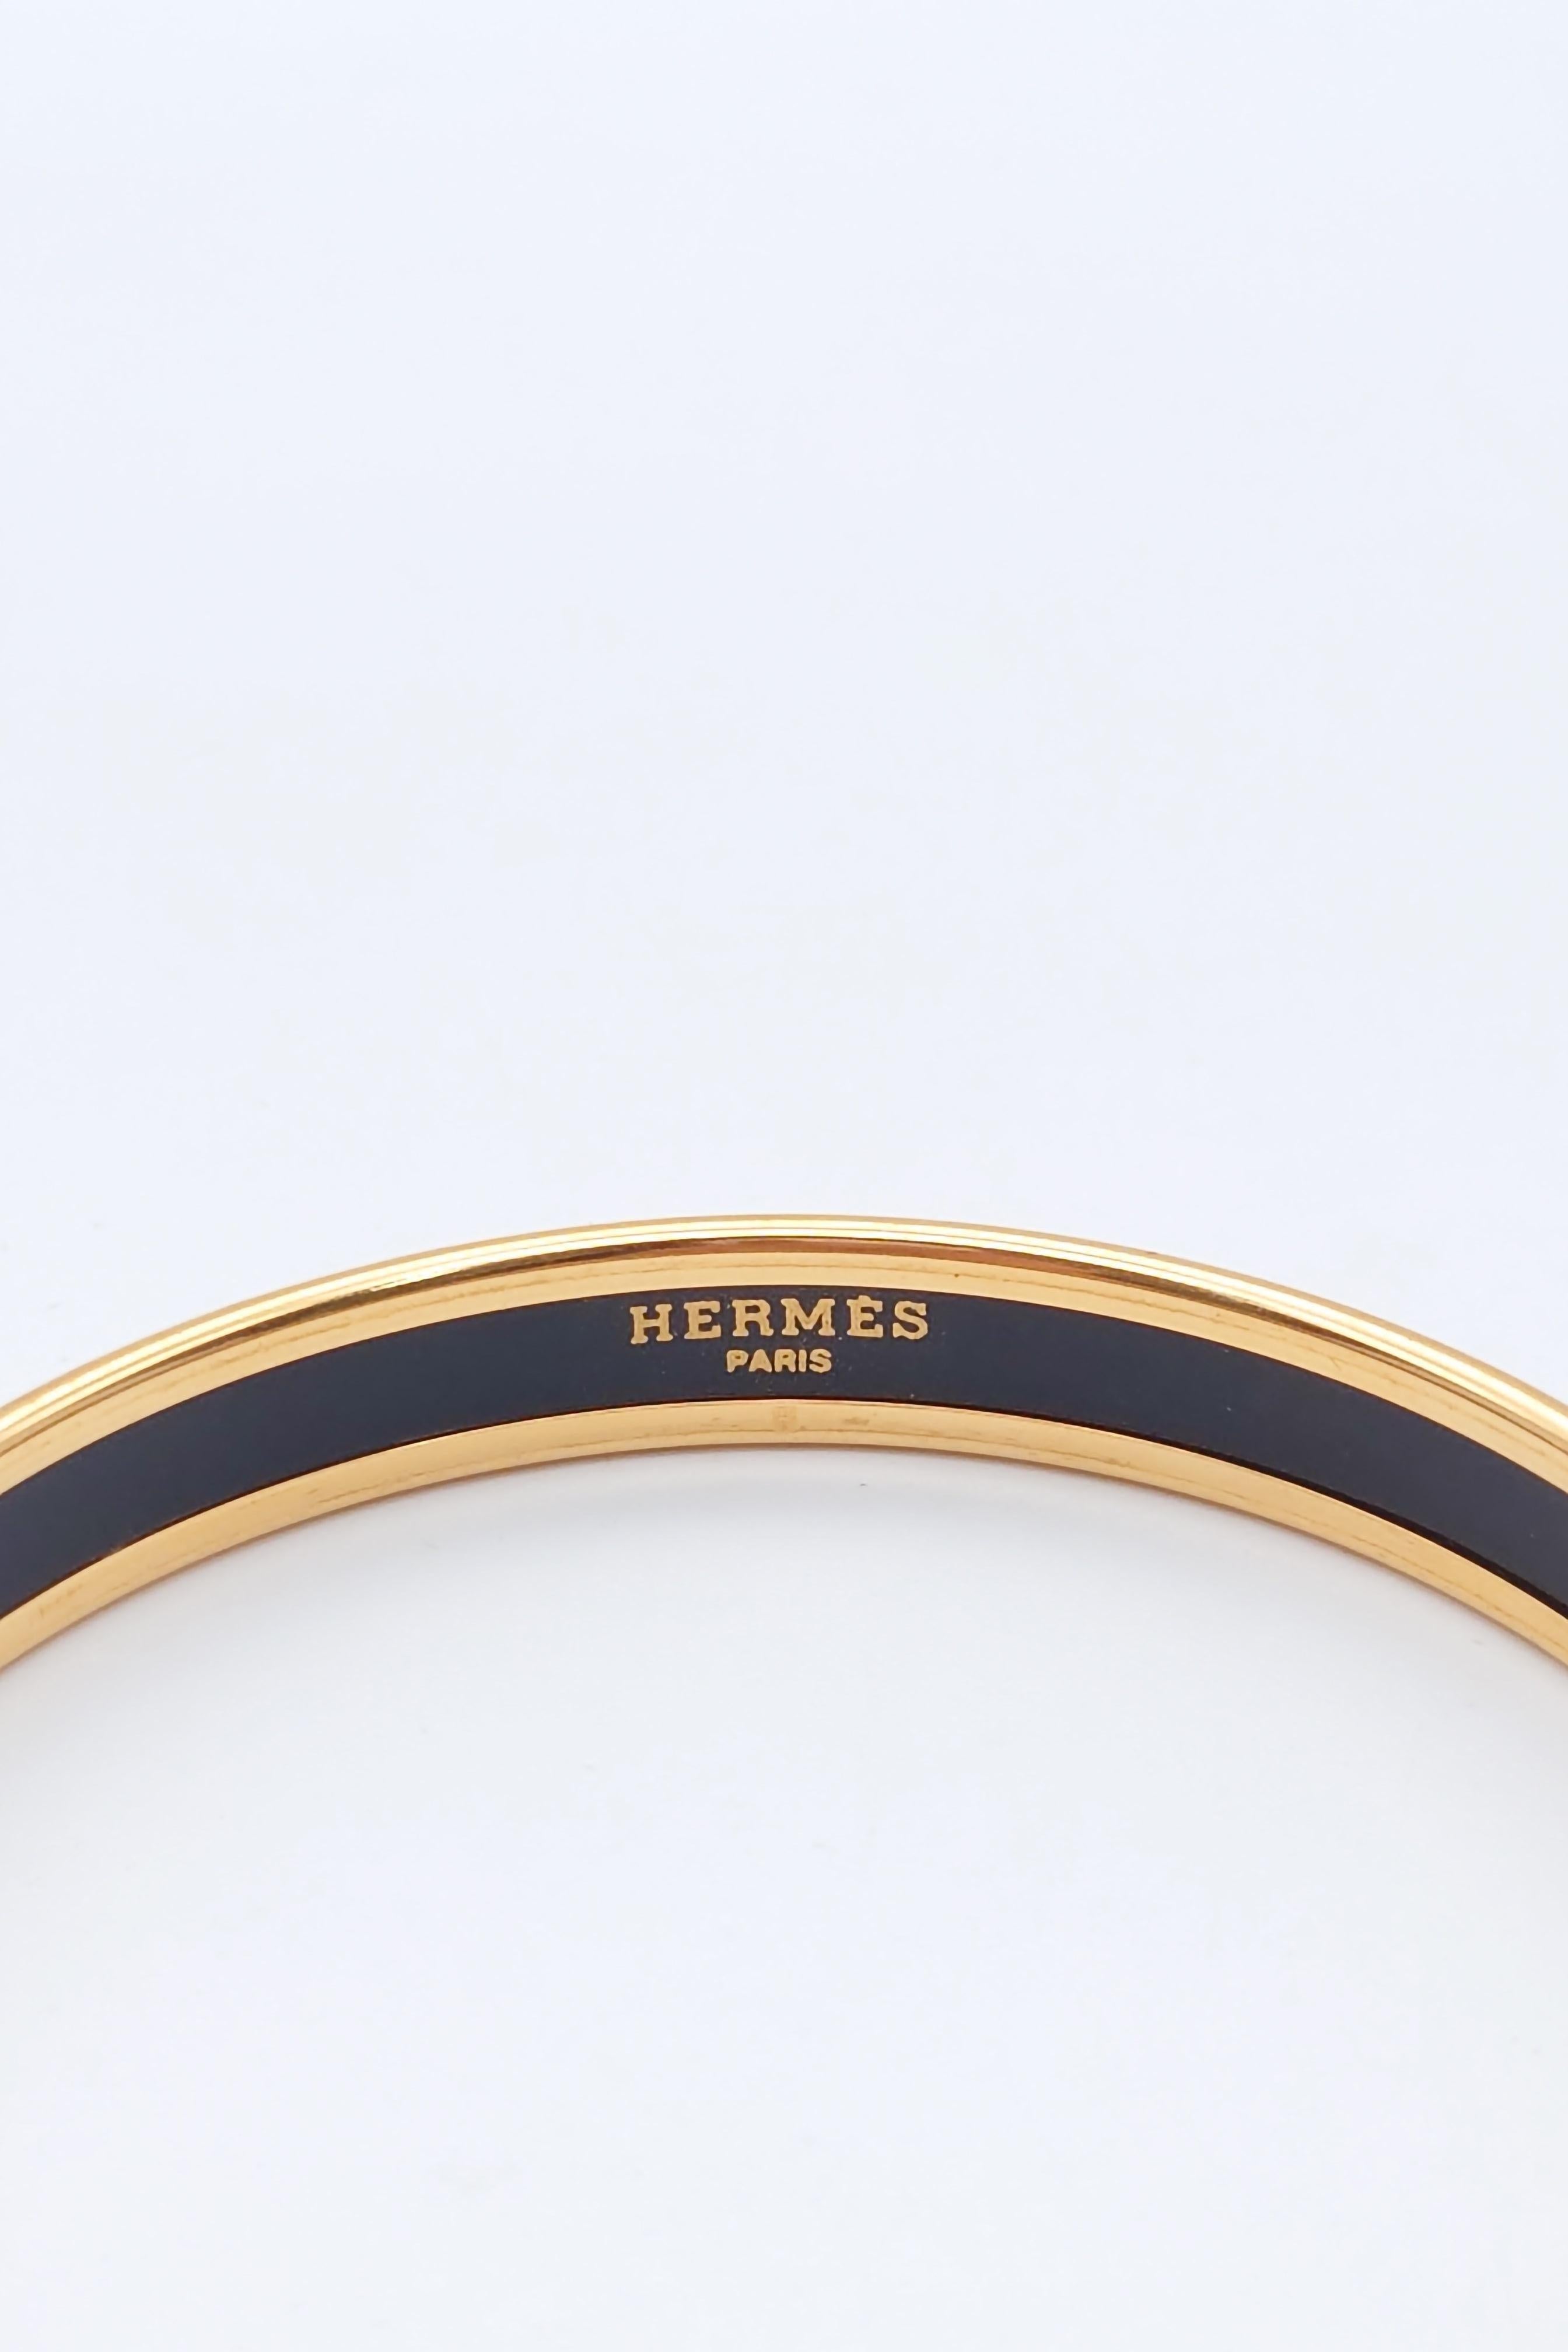 Women's or Men's Authentic Hermes Bracelet Vintage Enamel Bangle ”Band” For Sale